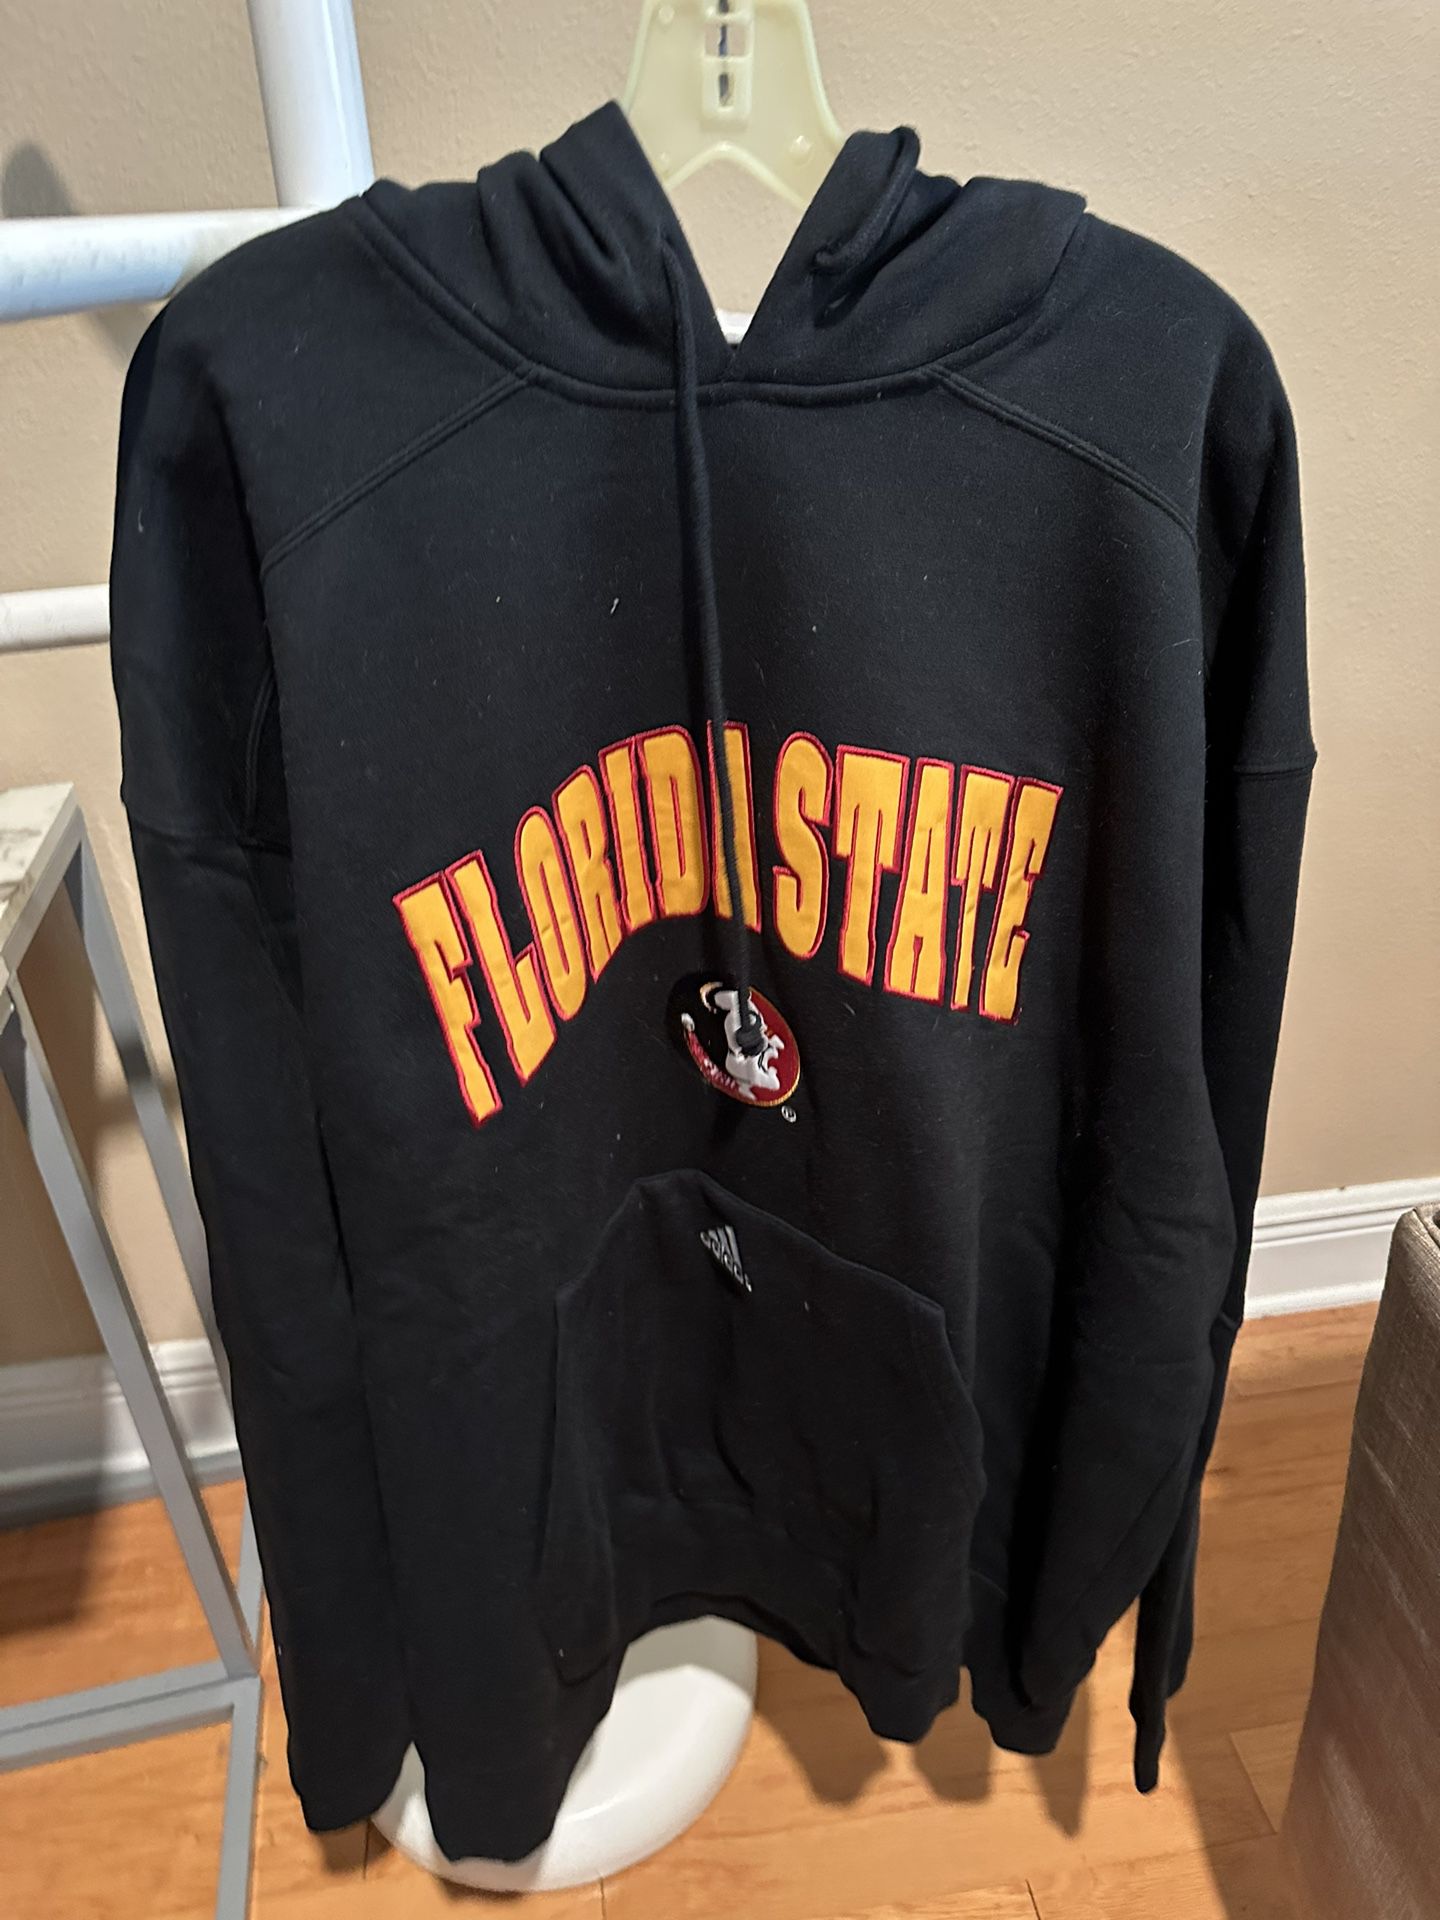 New Xxl Florida State Seminole Black Hoodie Sweatshirt 